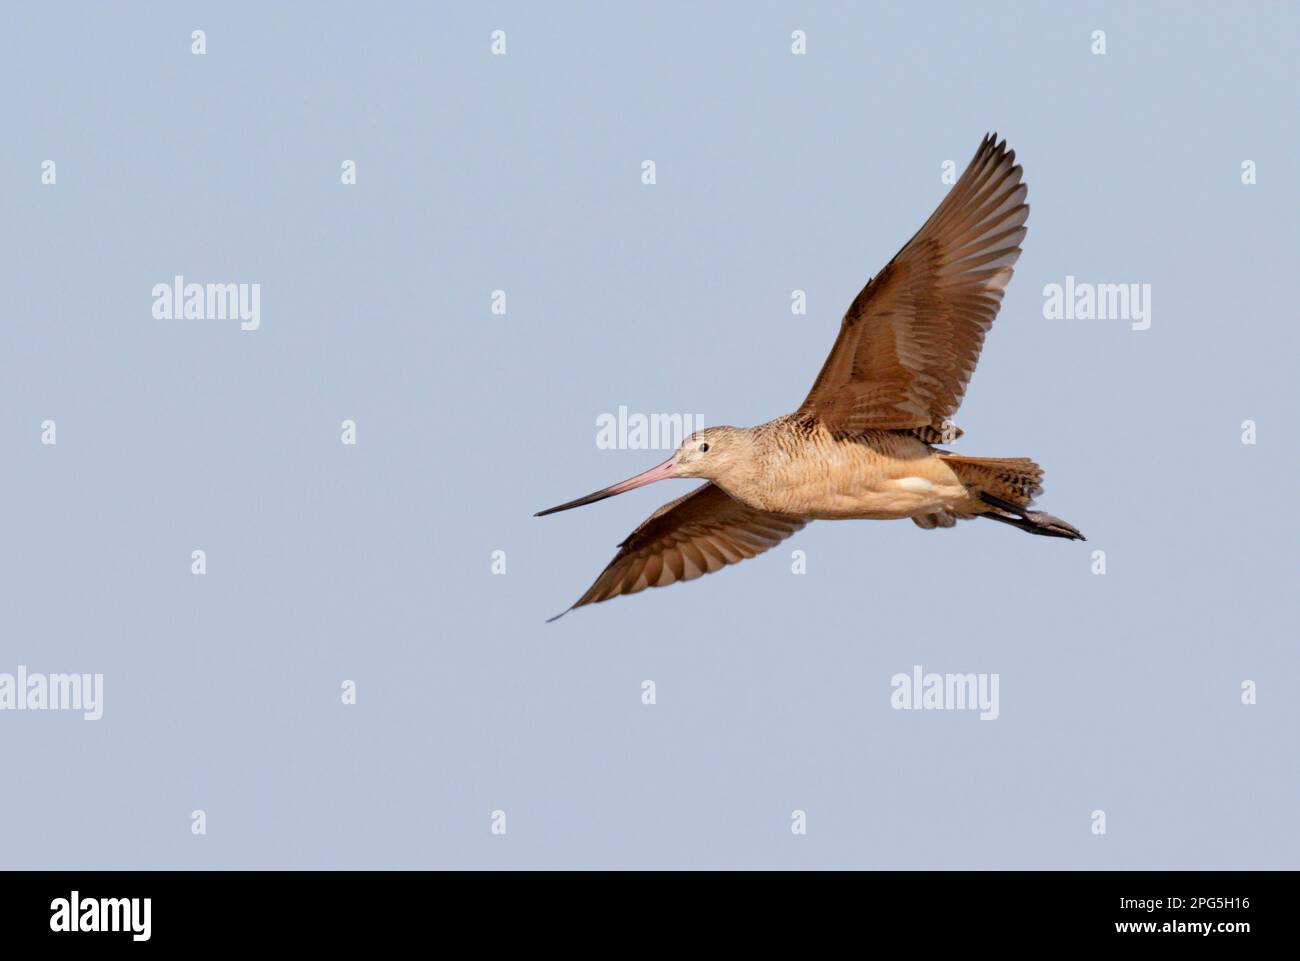 Marbled godwit (Limosa fedoa) flying in blue sky, Galveston, Texas, USA Stock Photo